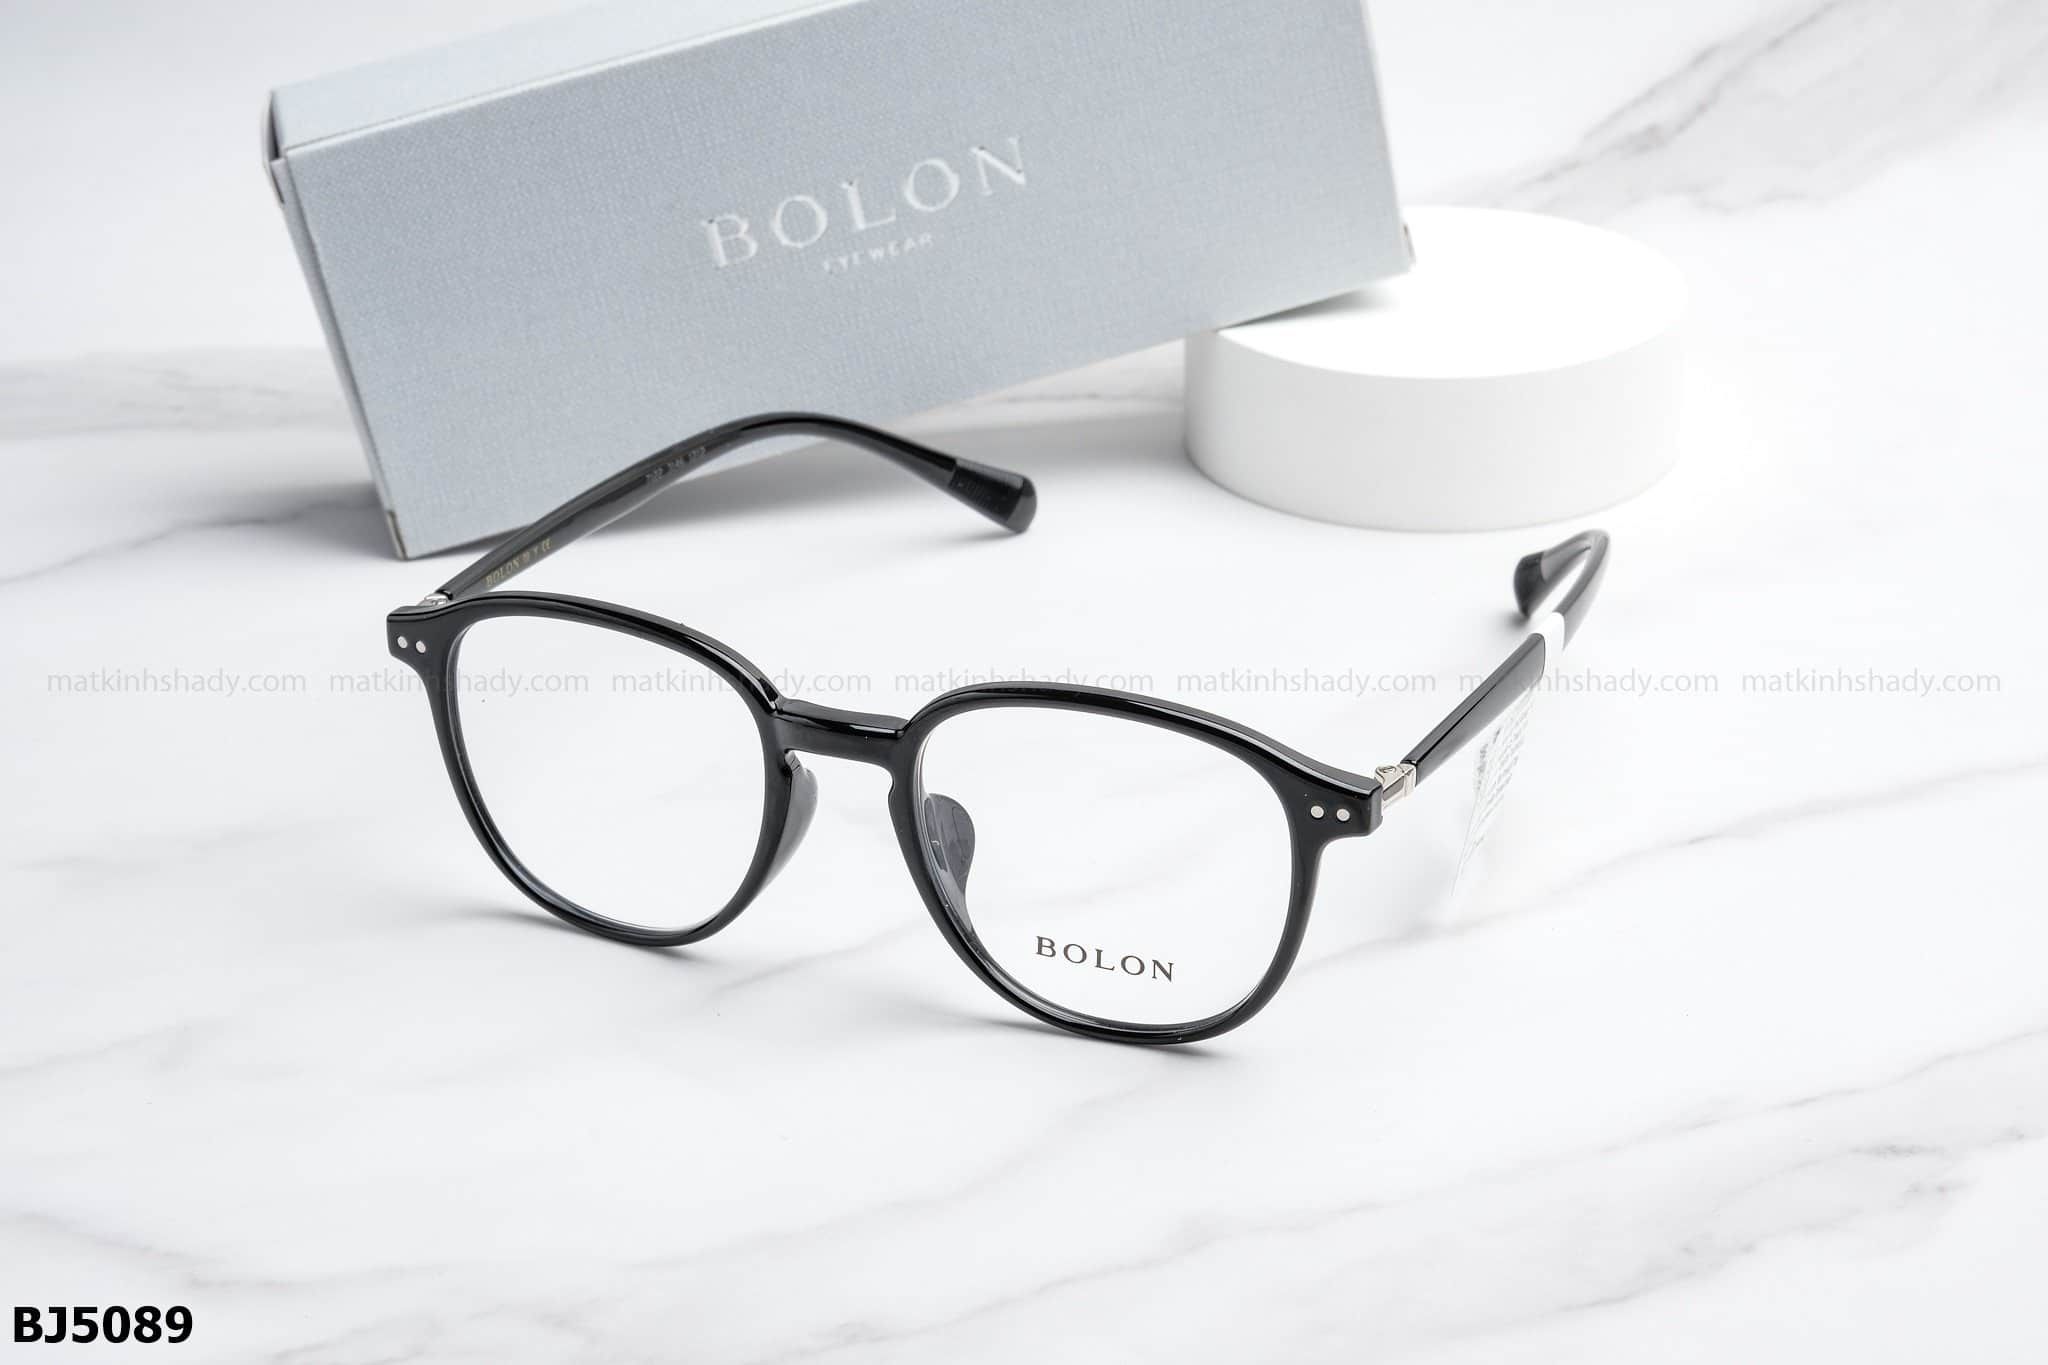  Bolon Eyewear - Glasses - BJ5089 